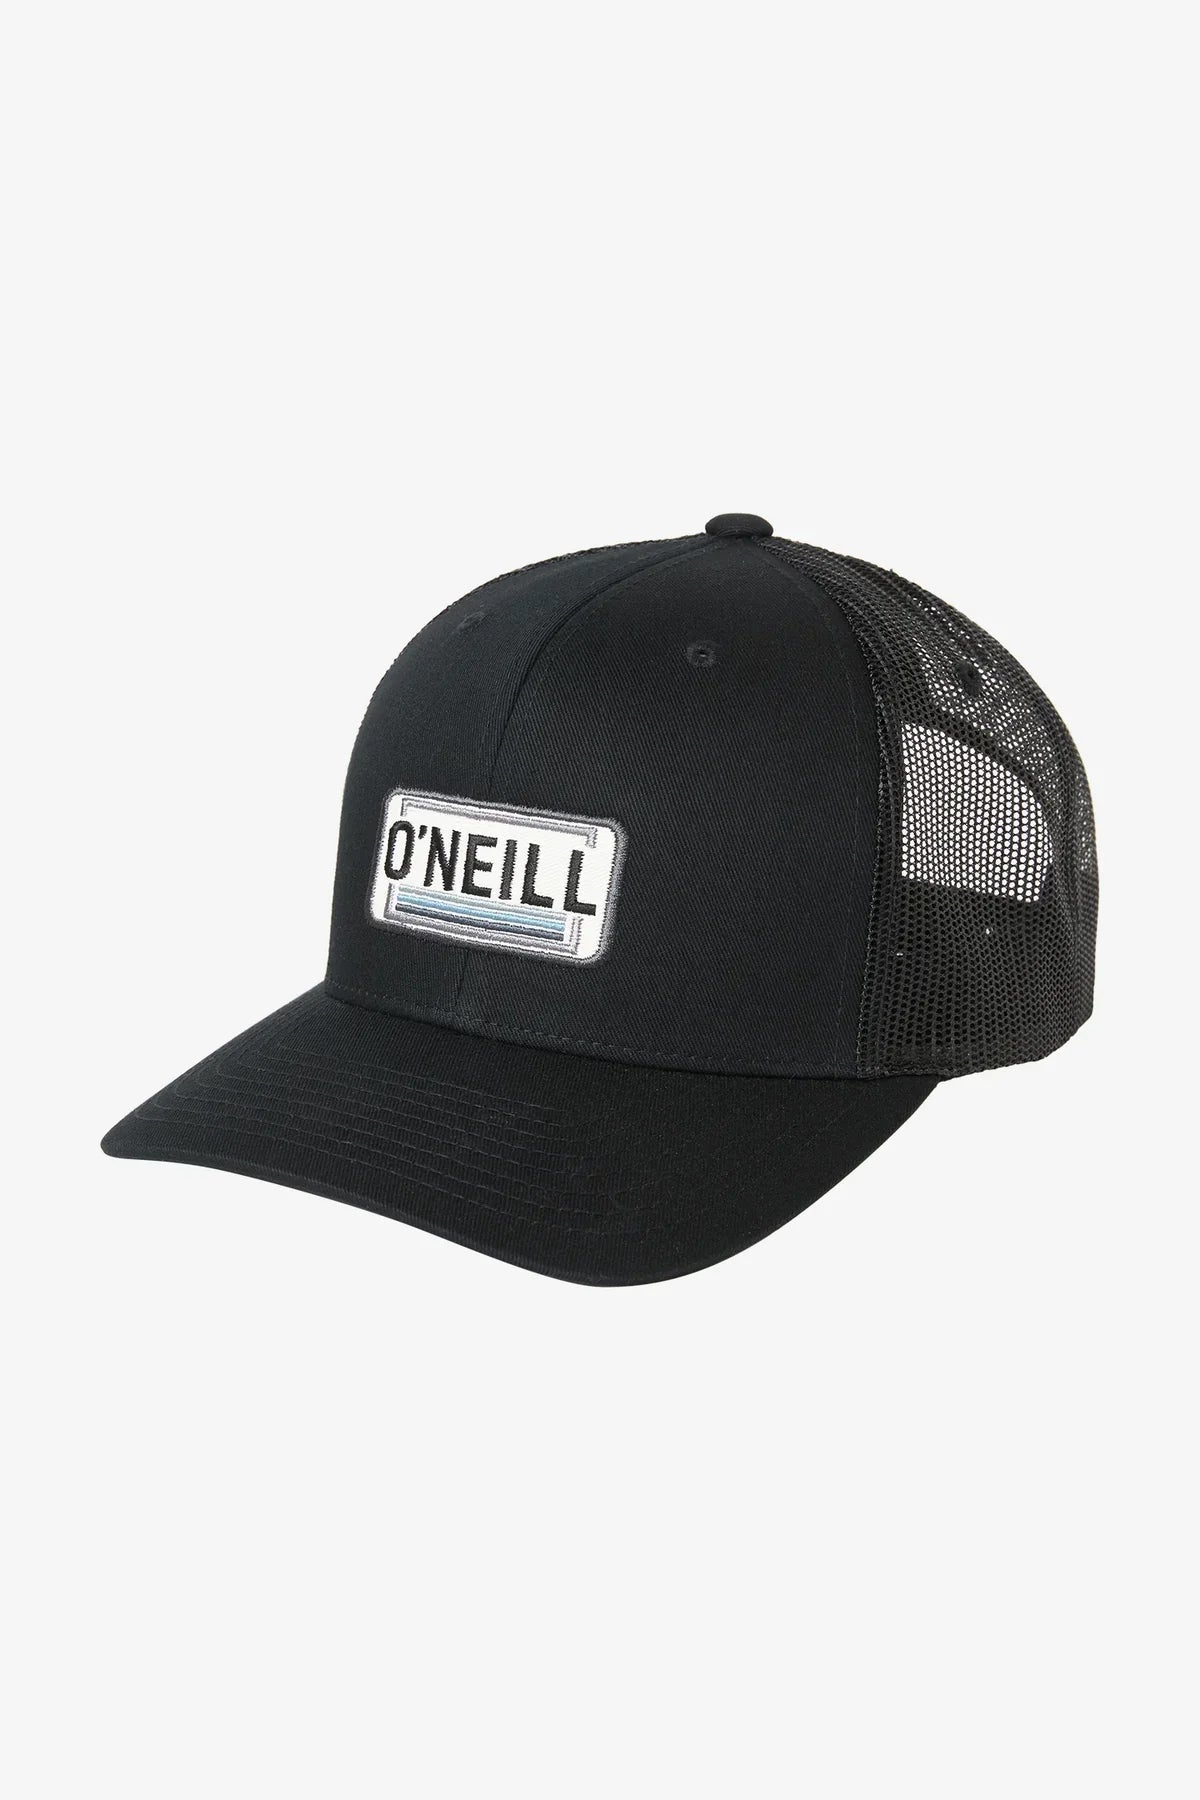 O'Neill Headquarters Trucker Hat